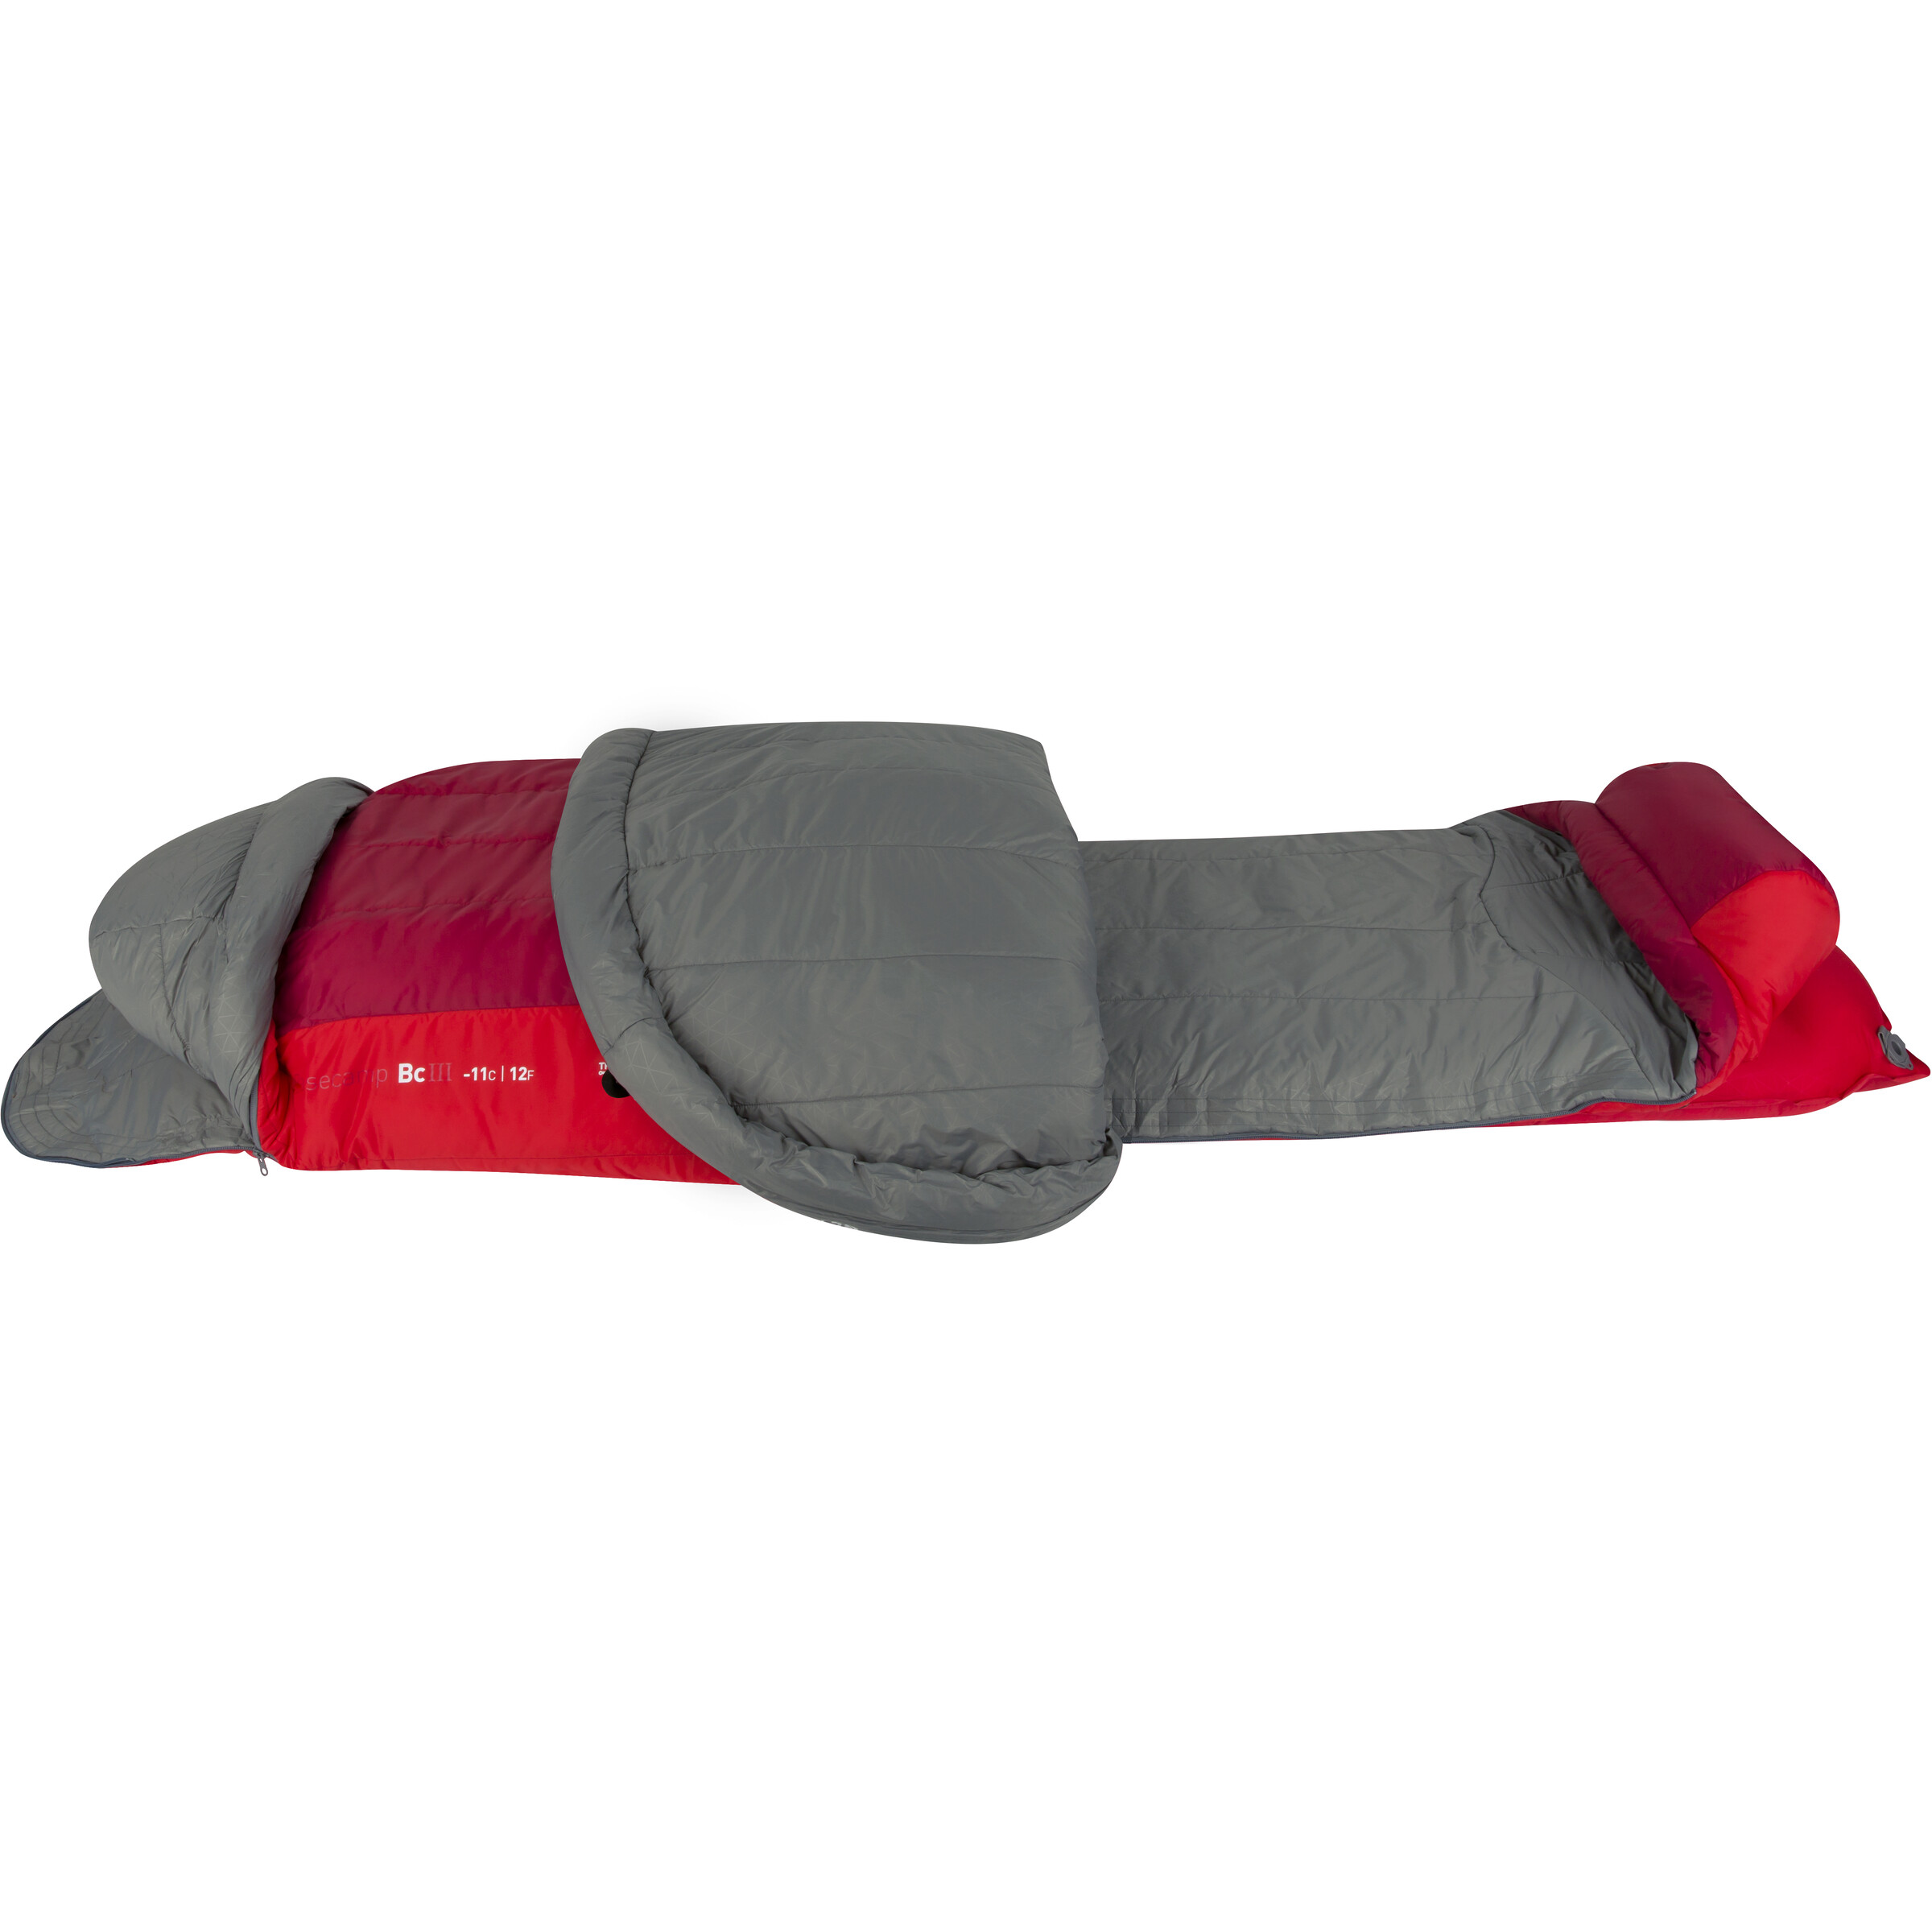 sea-to-summit-basecamp-bcii-sleeping-bag-regular-red-dark-red-6.jpg